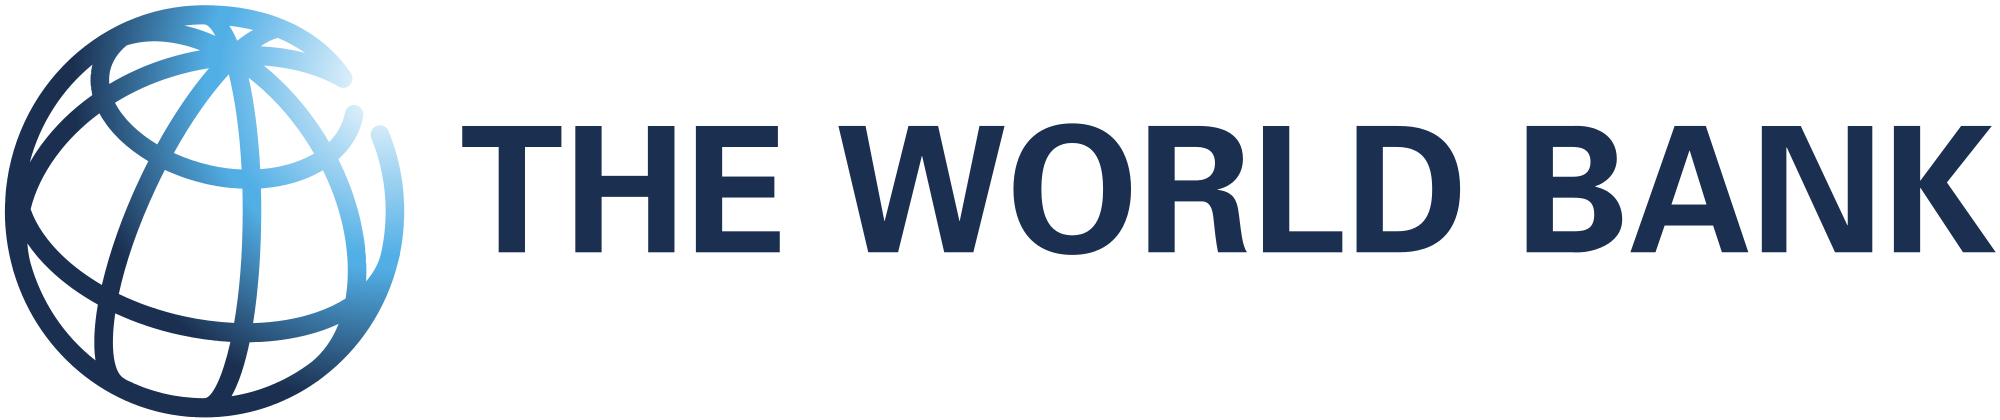 The_World_Bank_logo.png